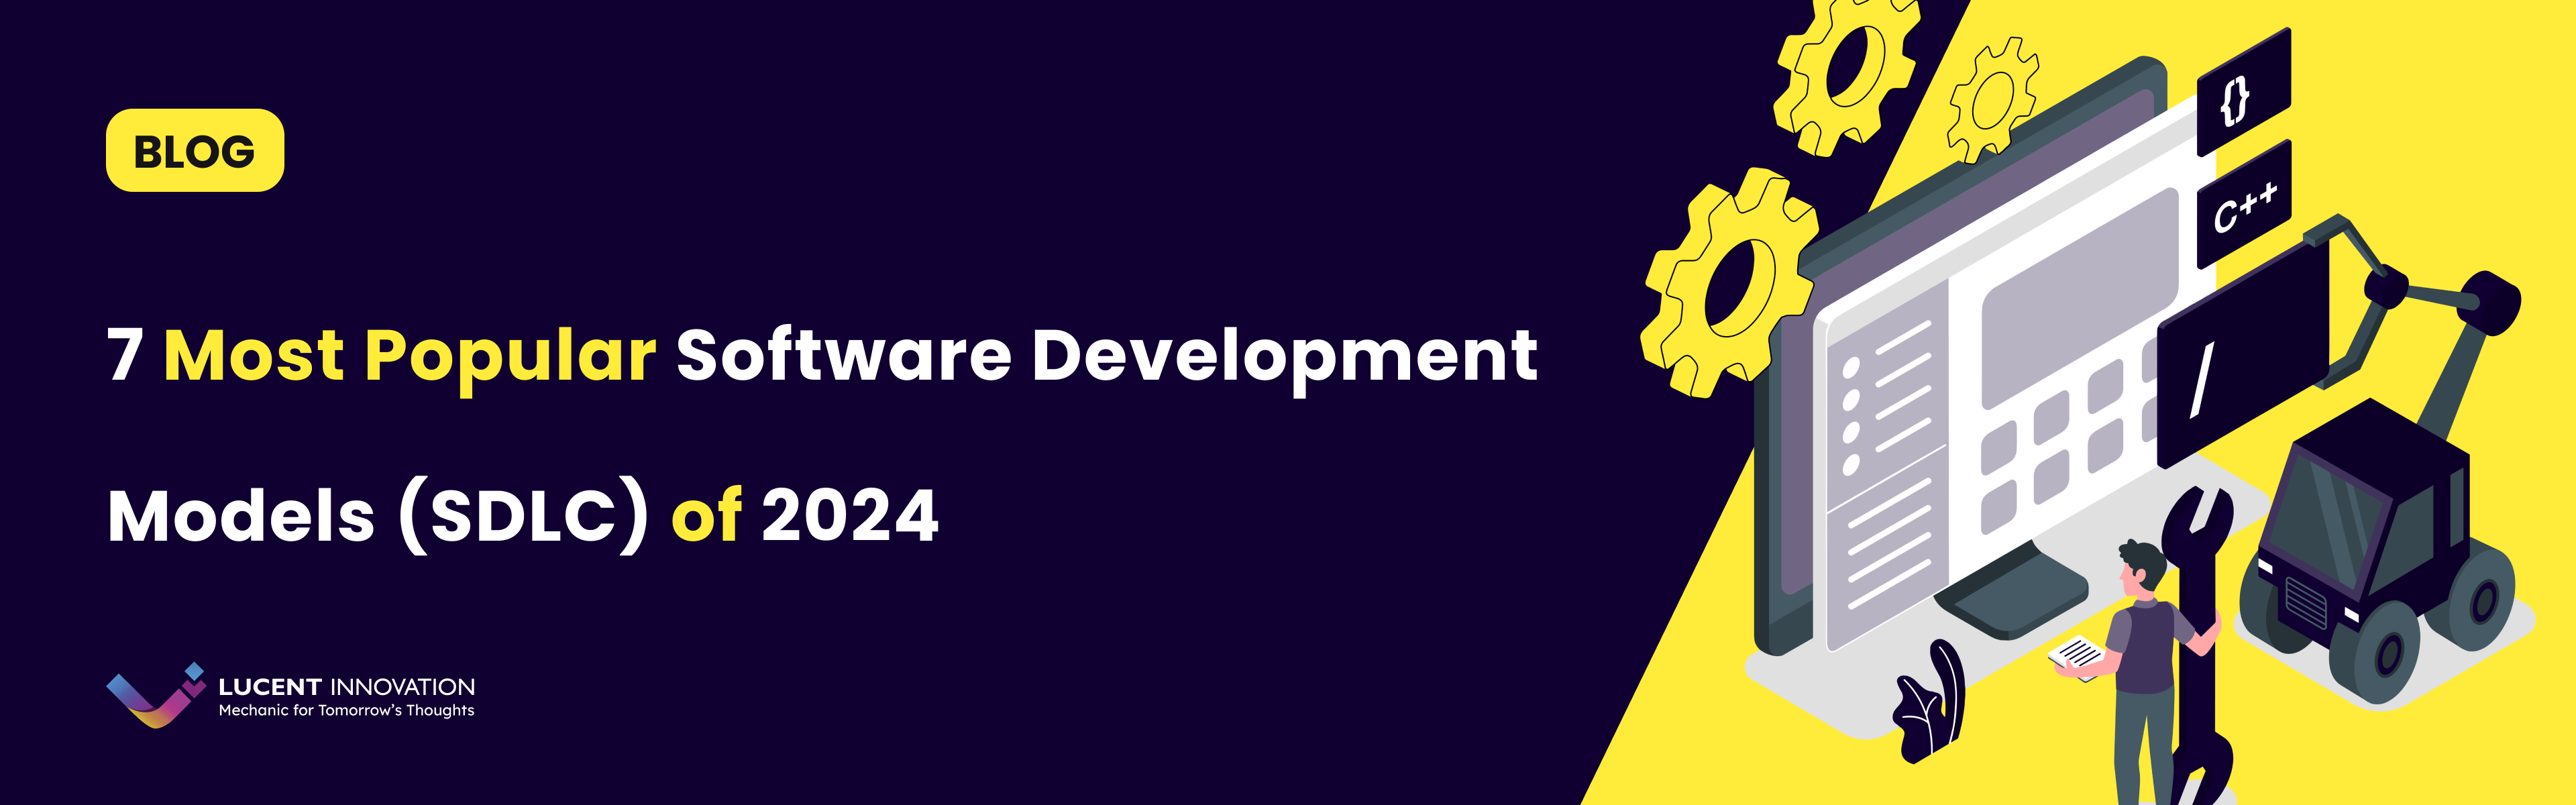 7 Most Popular Software Development Models (SDLC) of 2024.